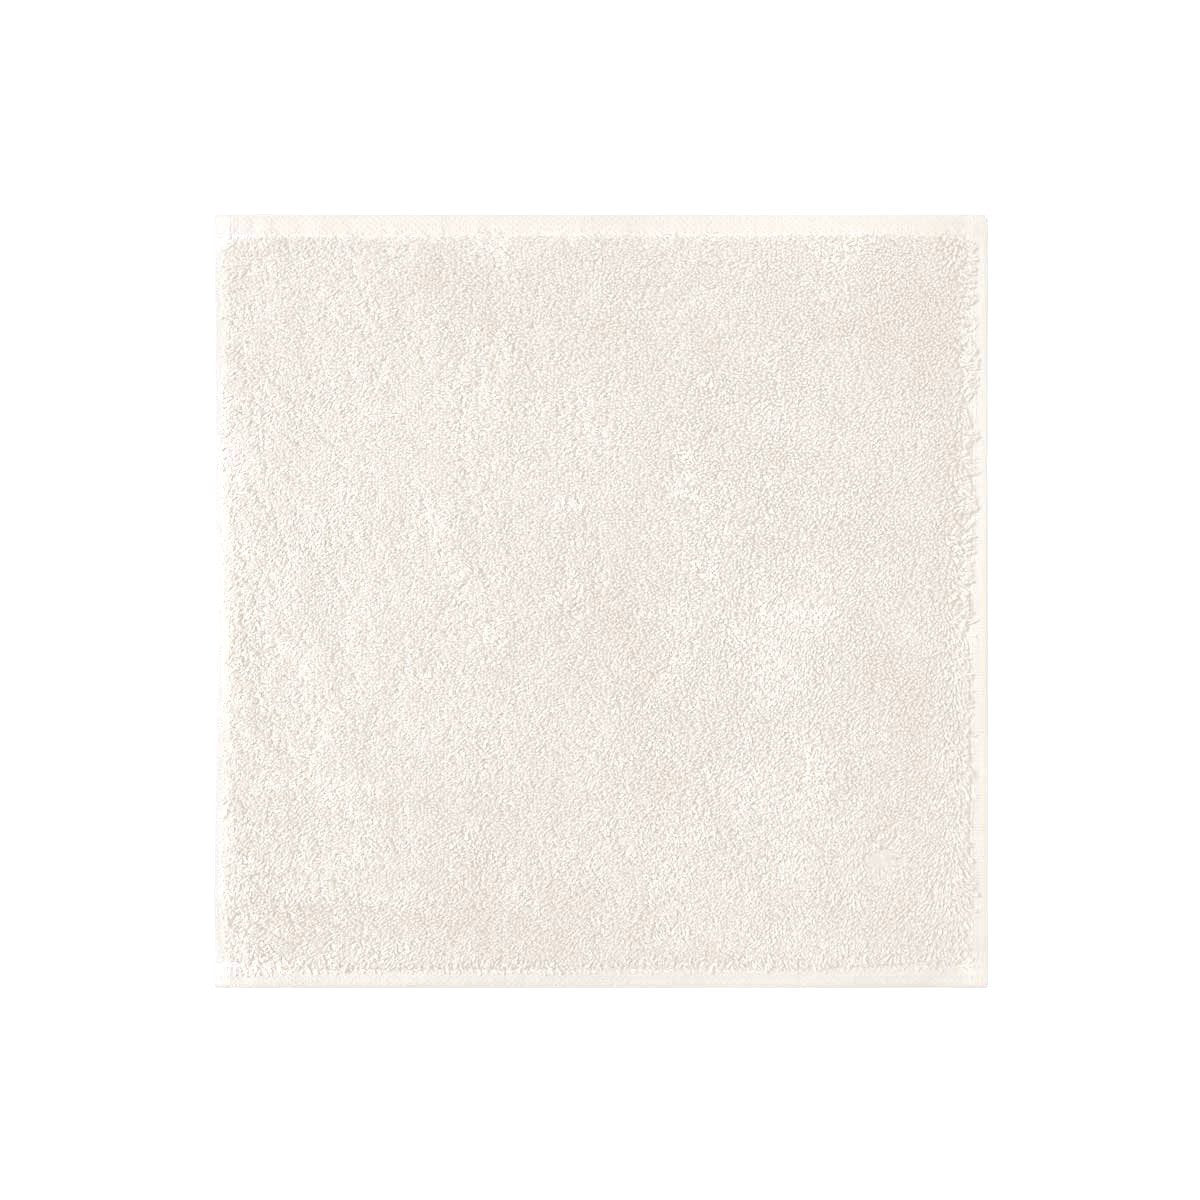 Etoile Nacre Bath Collection by Yves Delorme | Fig Linens - Ivory bath linen, towel, bath rug